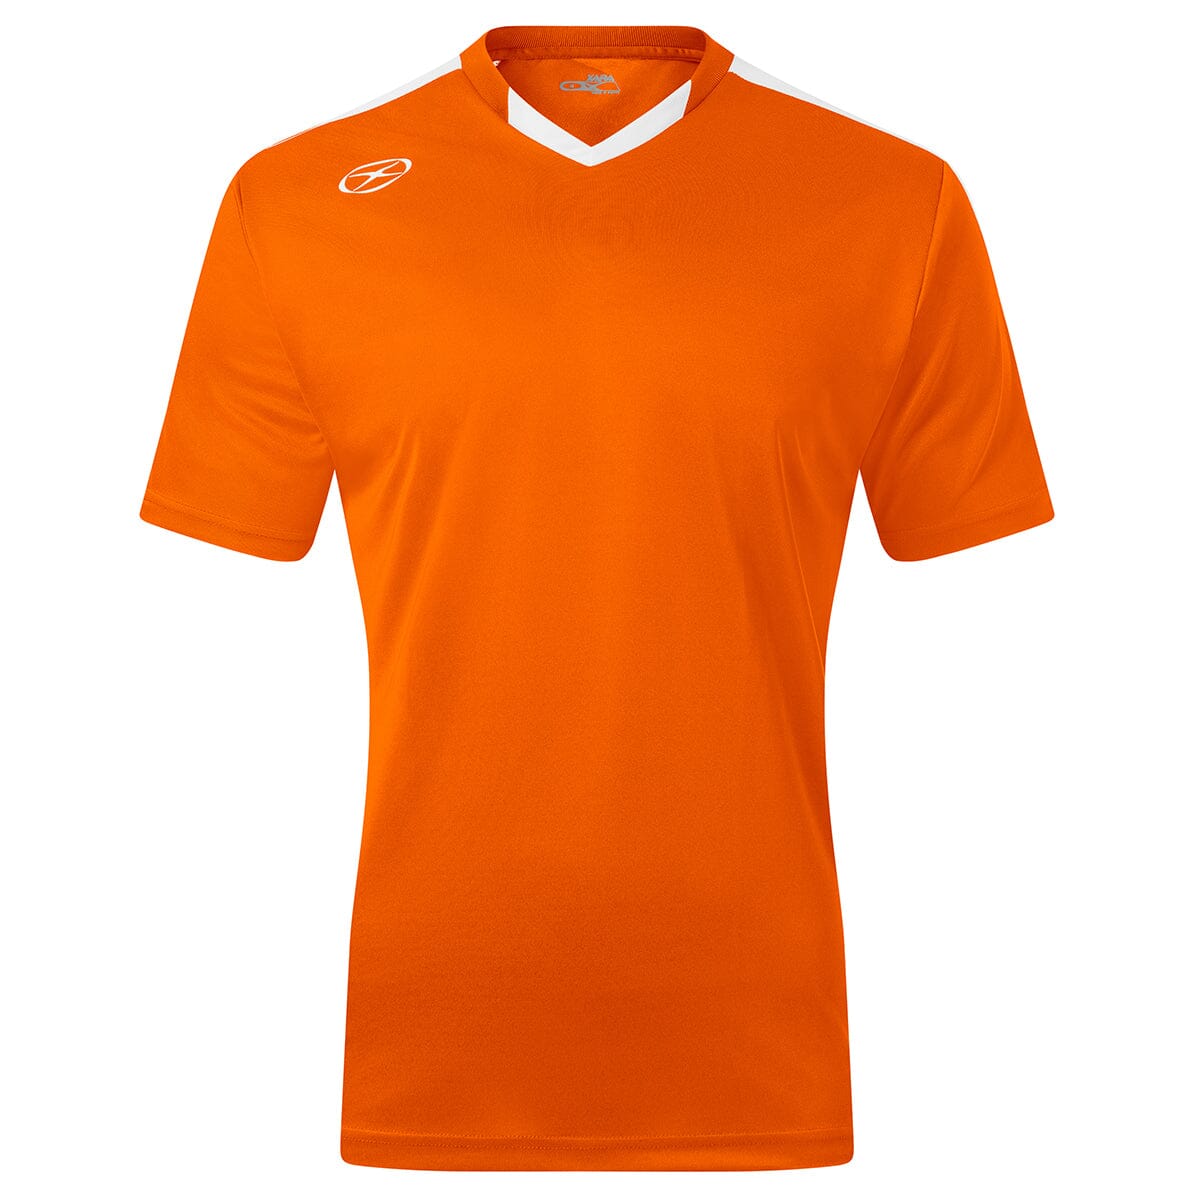 Britannia Jersey - Home Colors - Male Shirt Xara Soccer Orange/White Youth Medium 